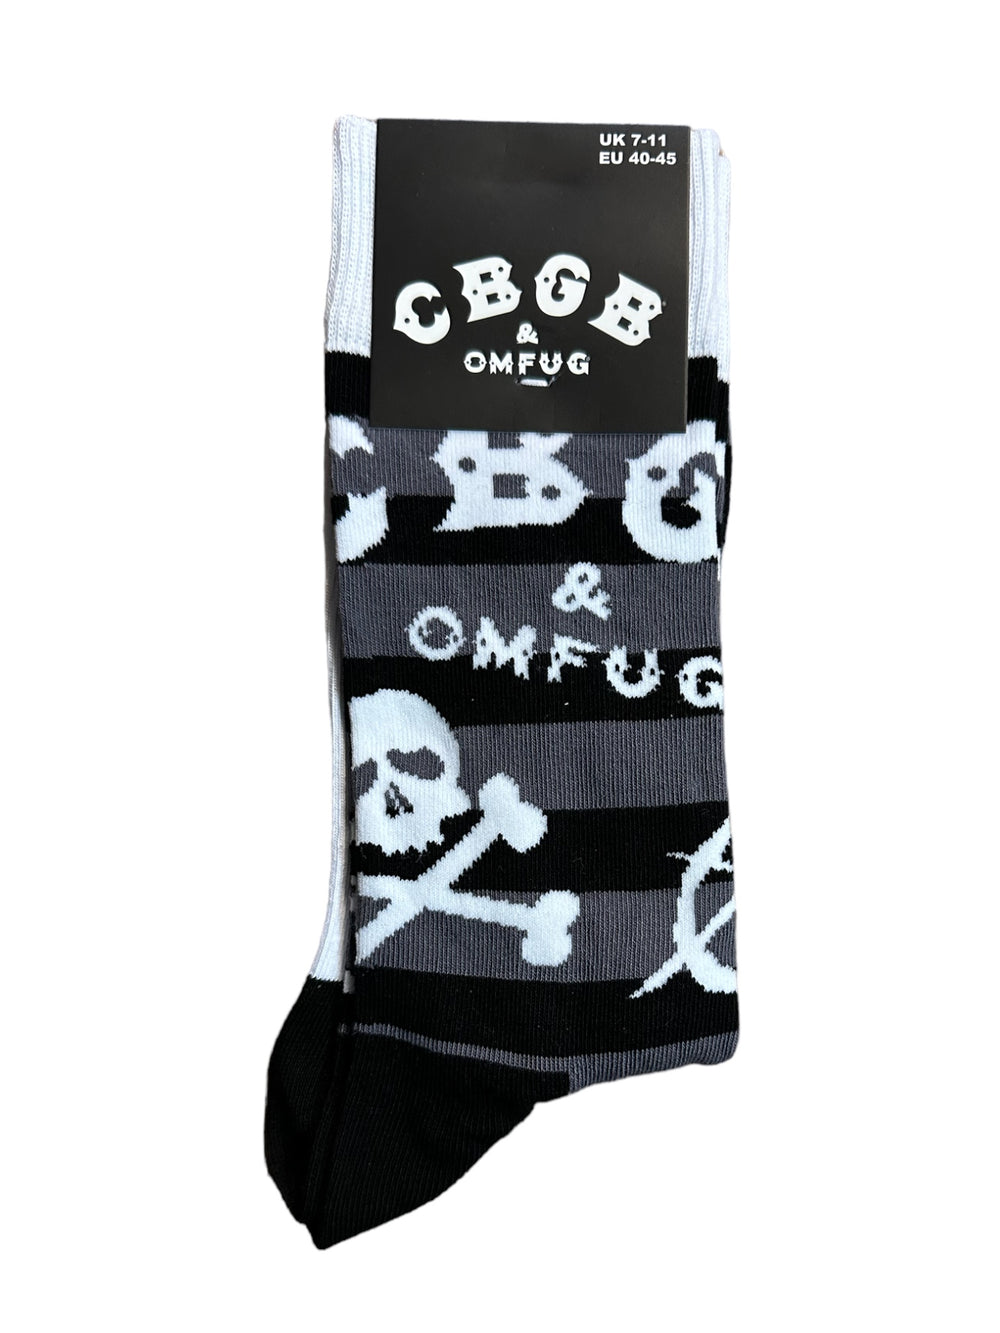 CBGB Logos Punk Rock Official Product 1 Pair Jacquard Socks Brand New